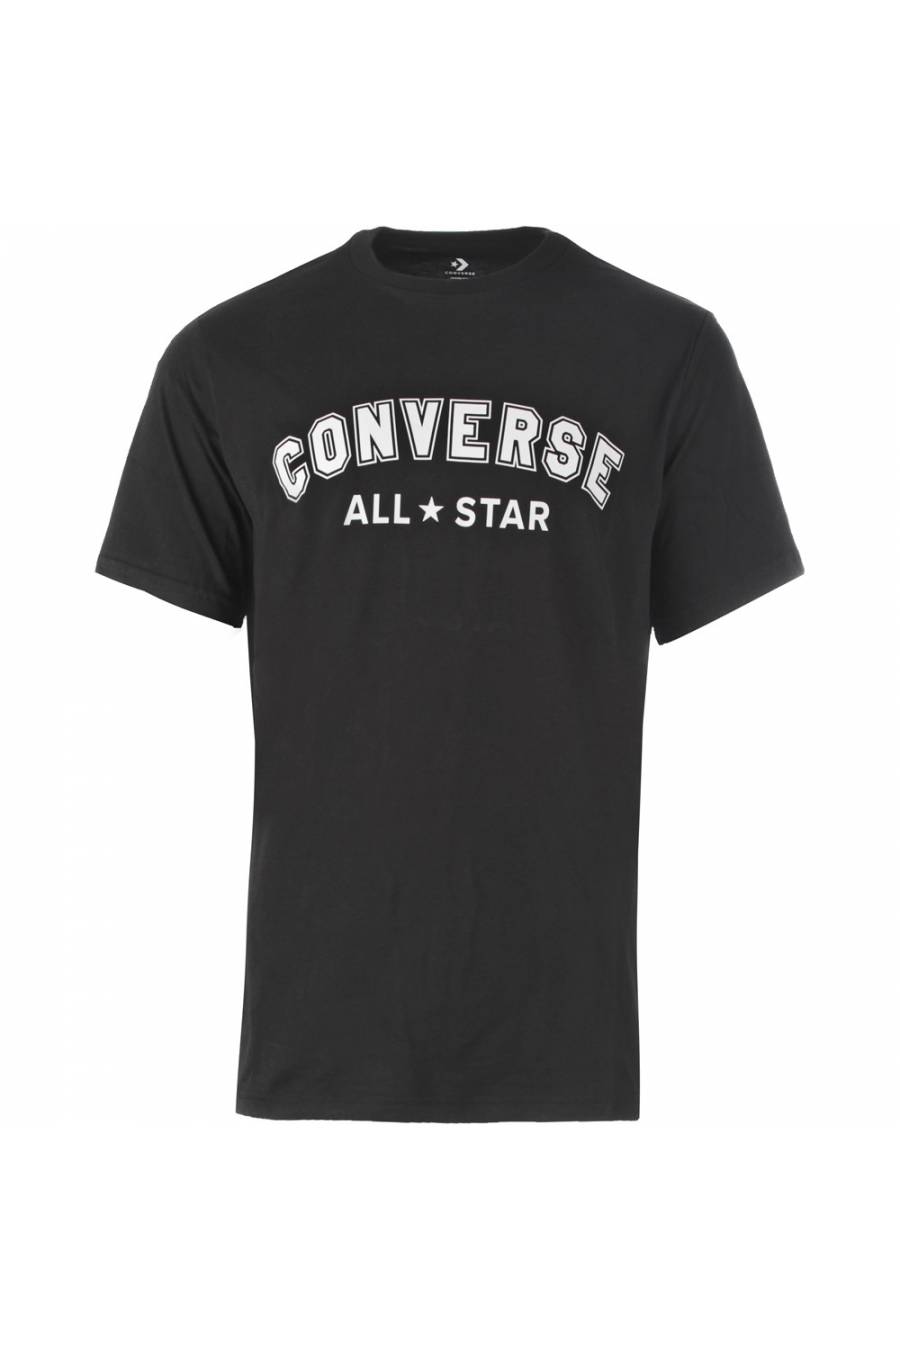 Camiseta Converse Standar Fit All Star 10024566-A02